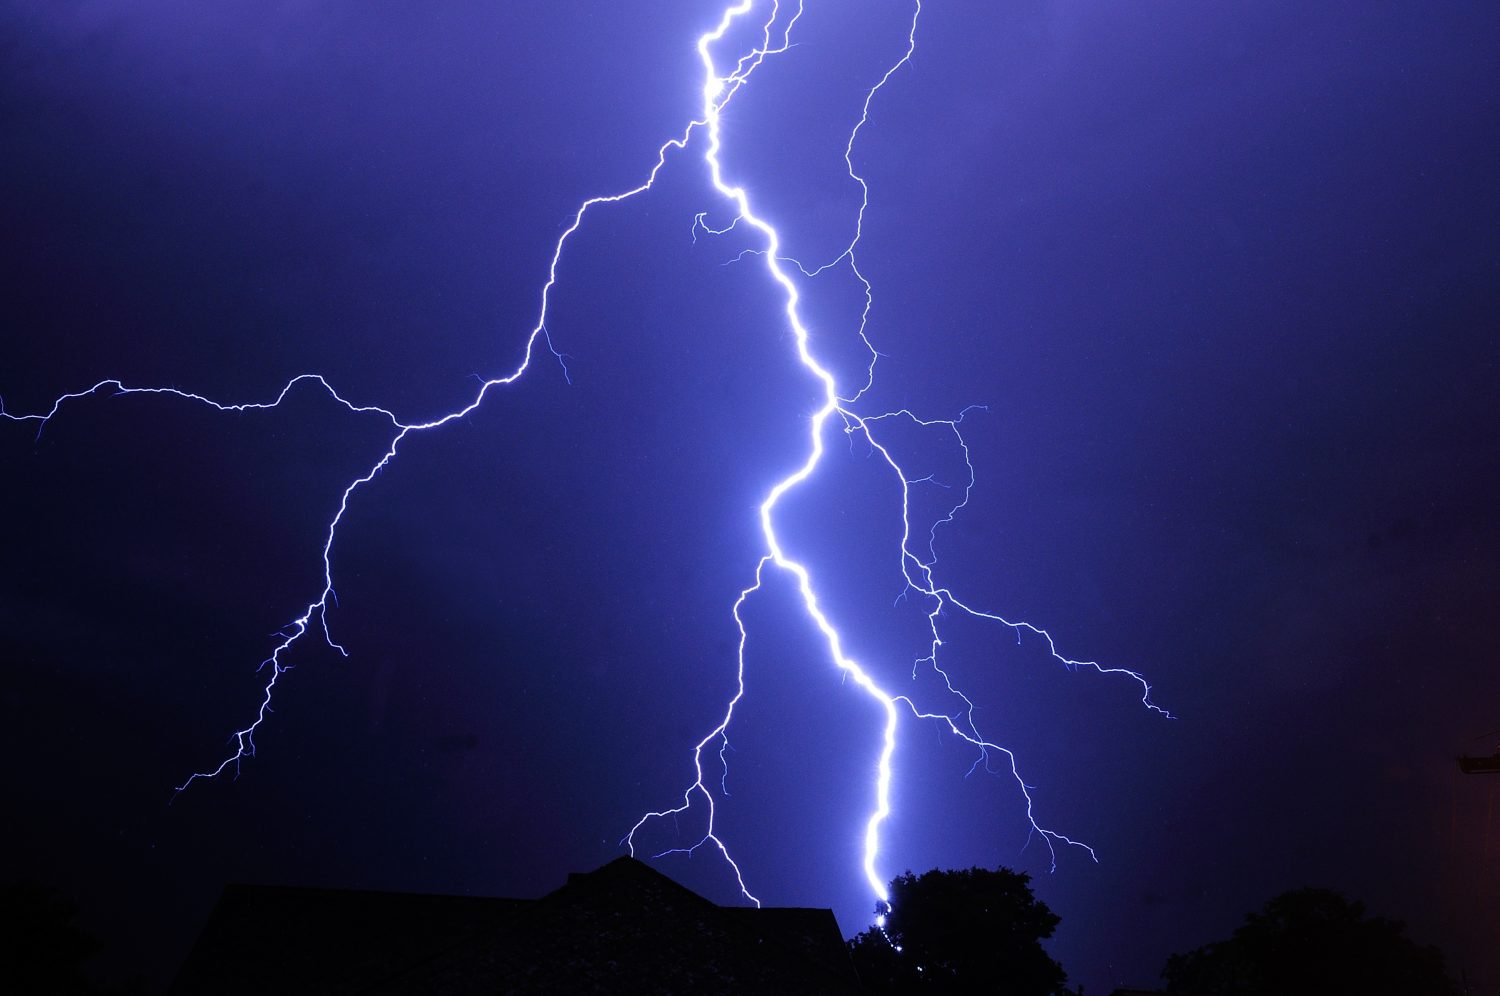 Severe thunderstorm warning lifted (update) CityNews Kitchener